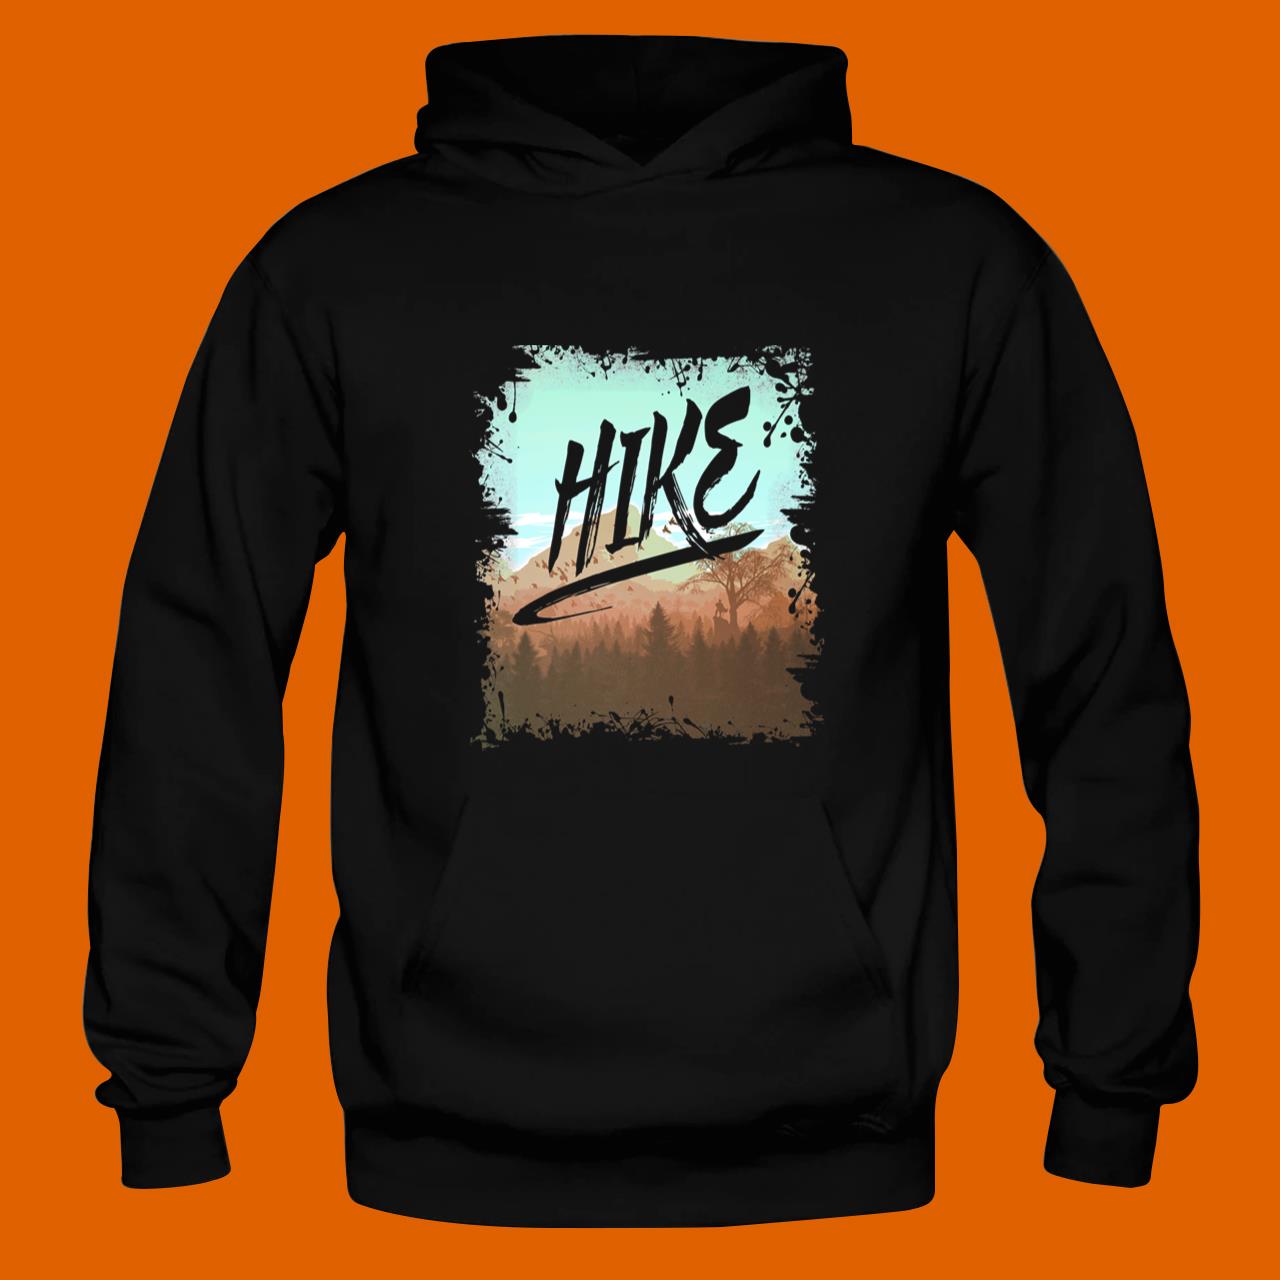 HIKE – I Love Hiking T-Shirt